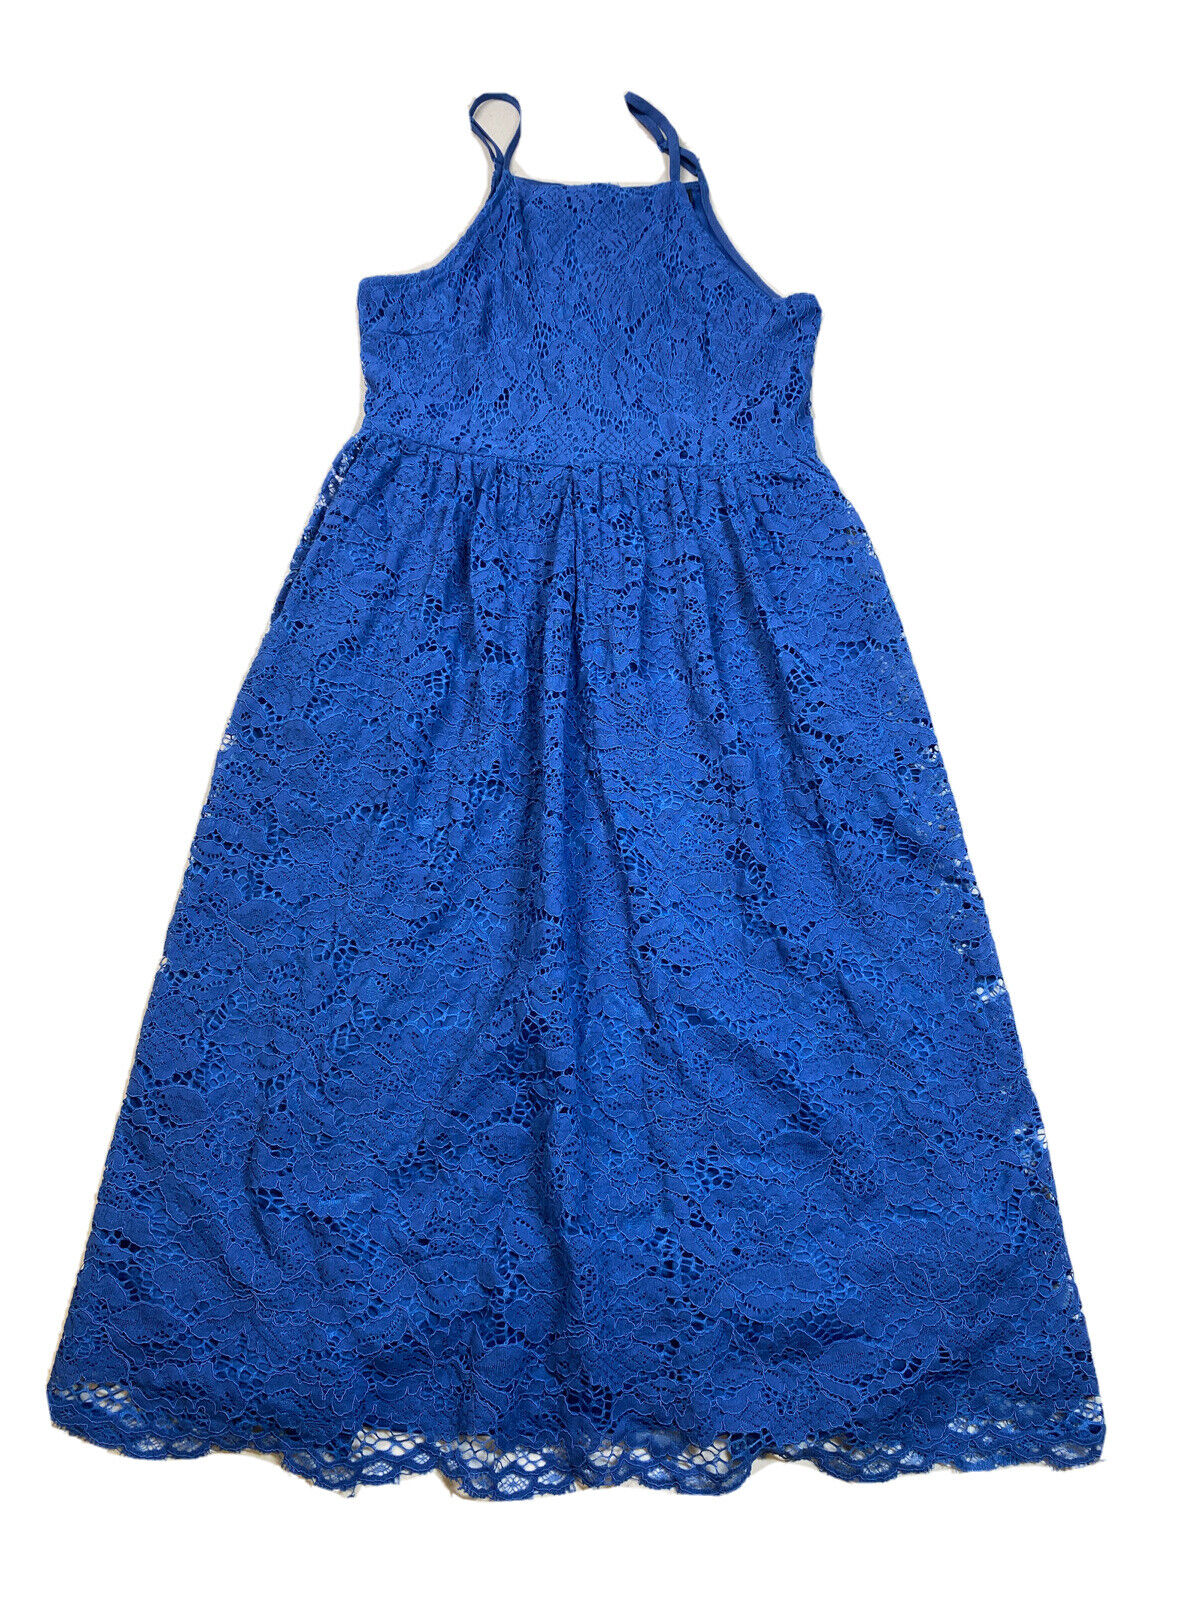 Lulus Women's Blue Lace High Neck Knee Length A-Line Dress - M